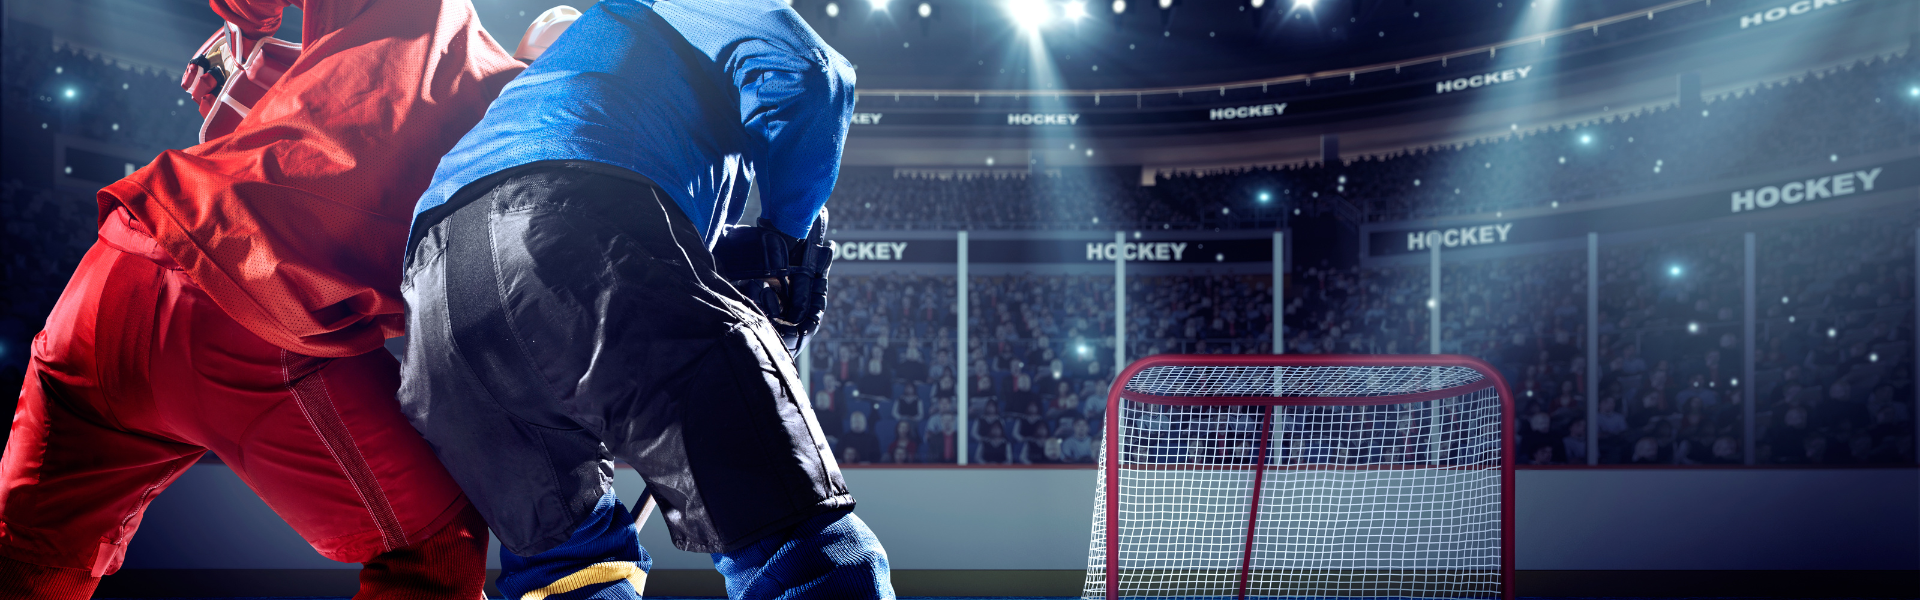 hockey app cover hd banner